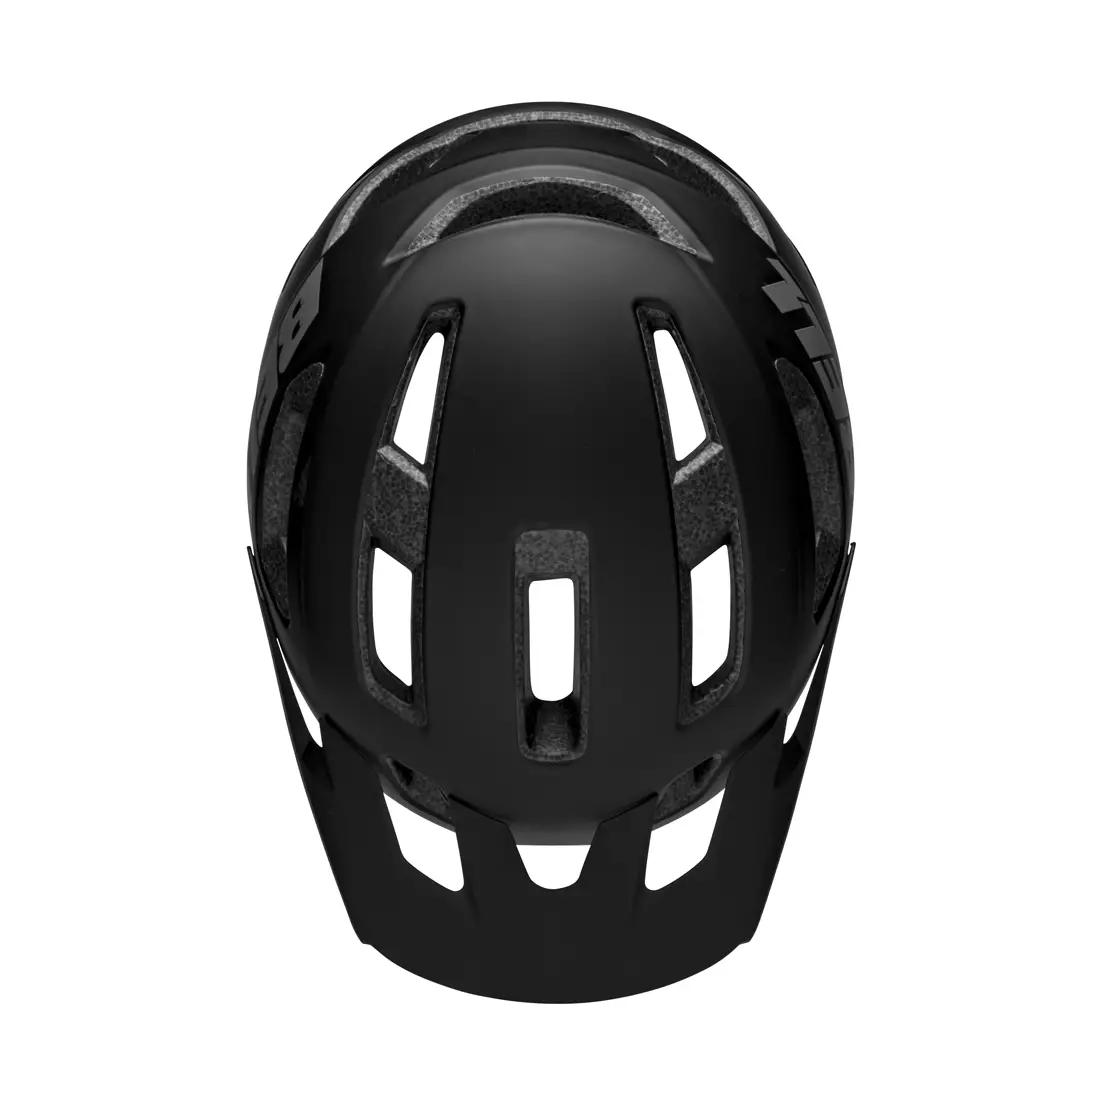 BELL NOMAD 2 JUNIOR children's MTB bicycle helmet, matte black